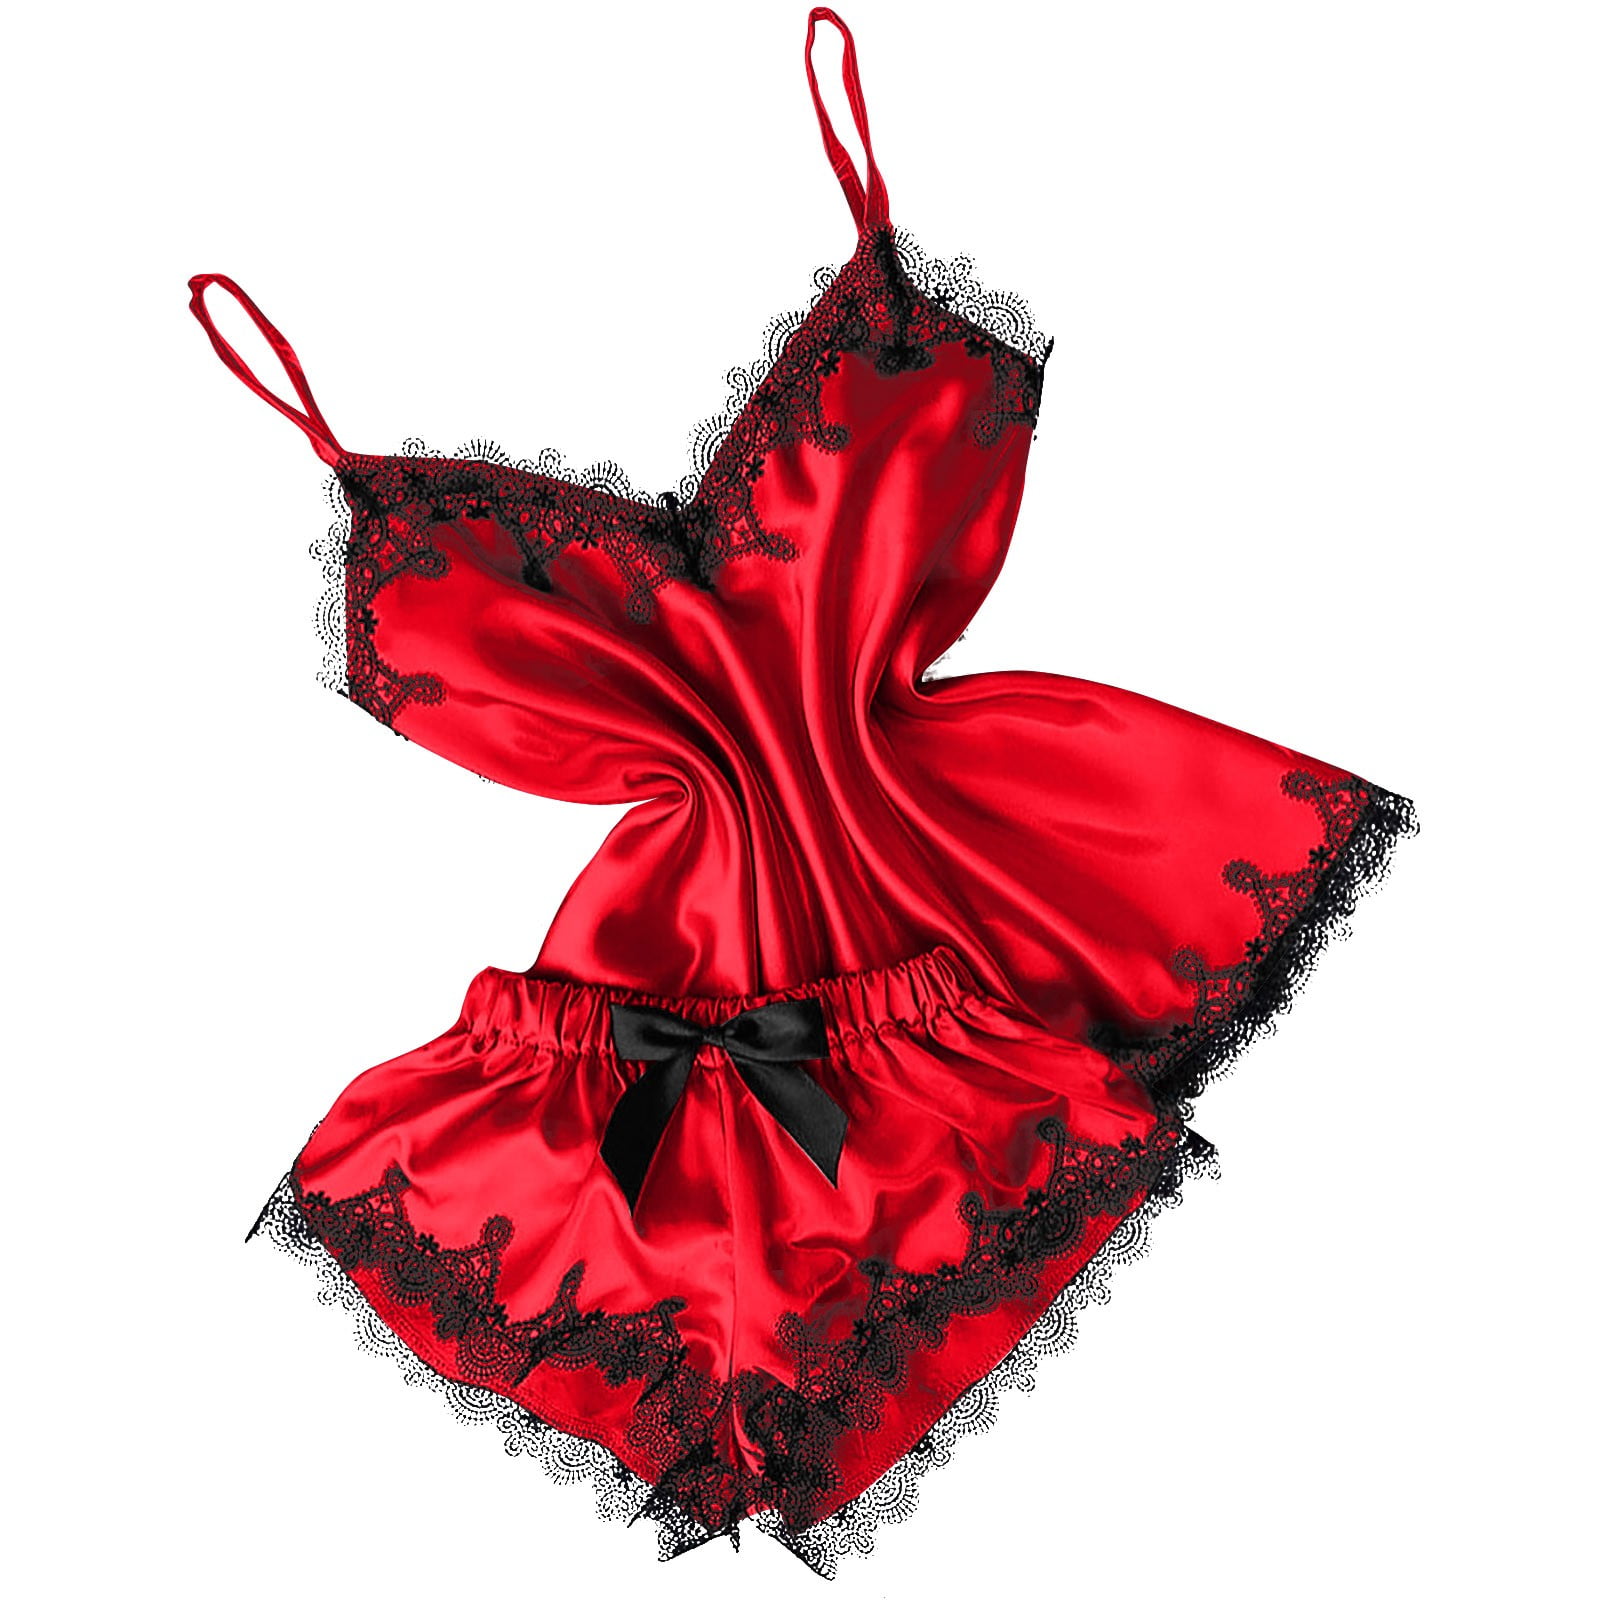 RQYYD Reduced Women's Plus Size Lingerie Set Spaghetti Strap Lace Trim  Bralette and Satin Shorts Sleepwear Pajama Set Red M 